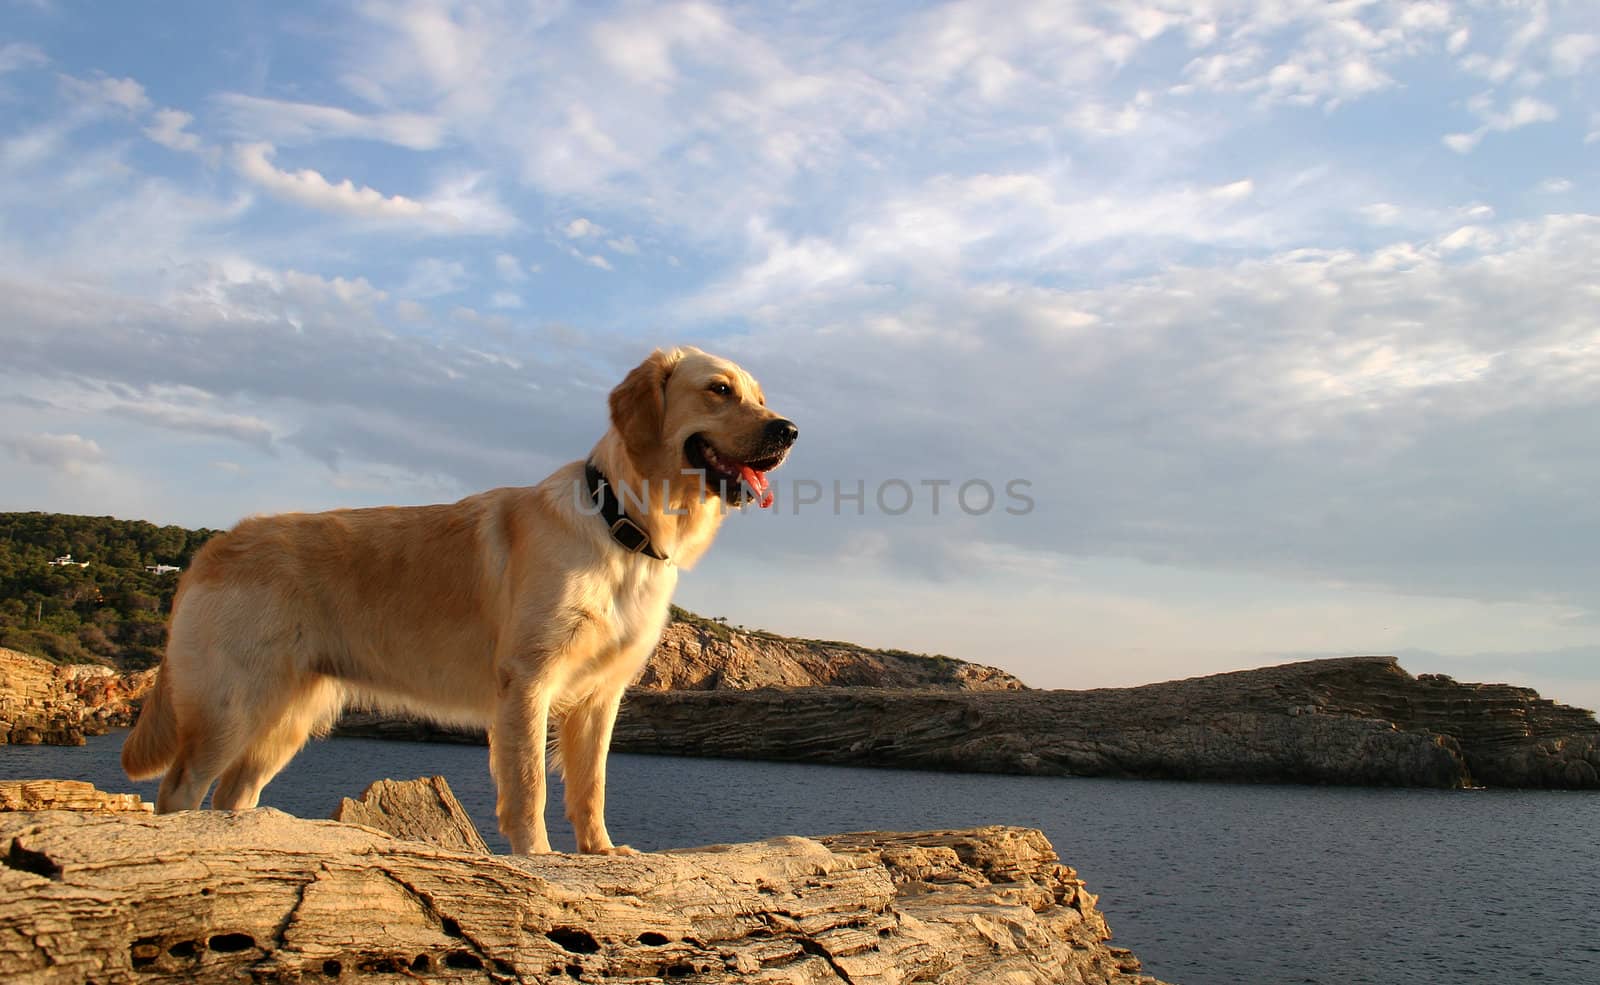 Golden retriever watching the Mediterranean Sea on Ibiza Island